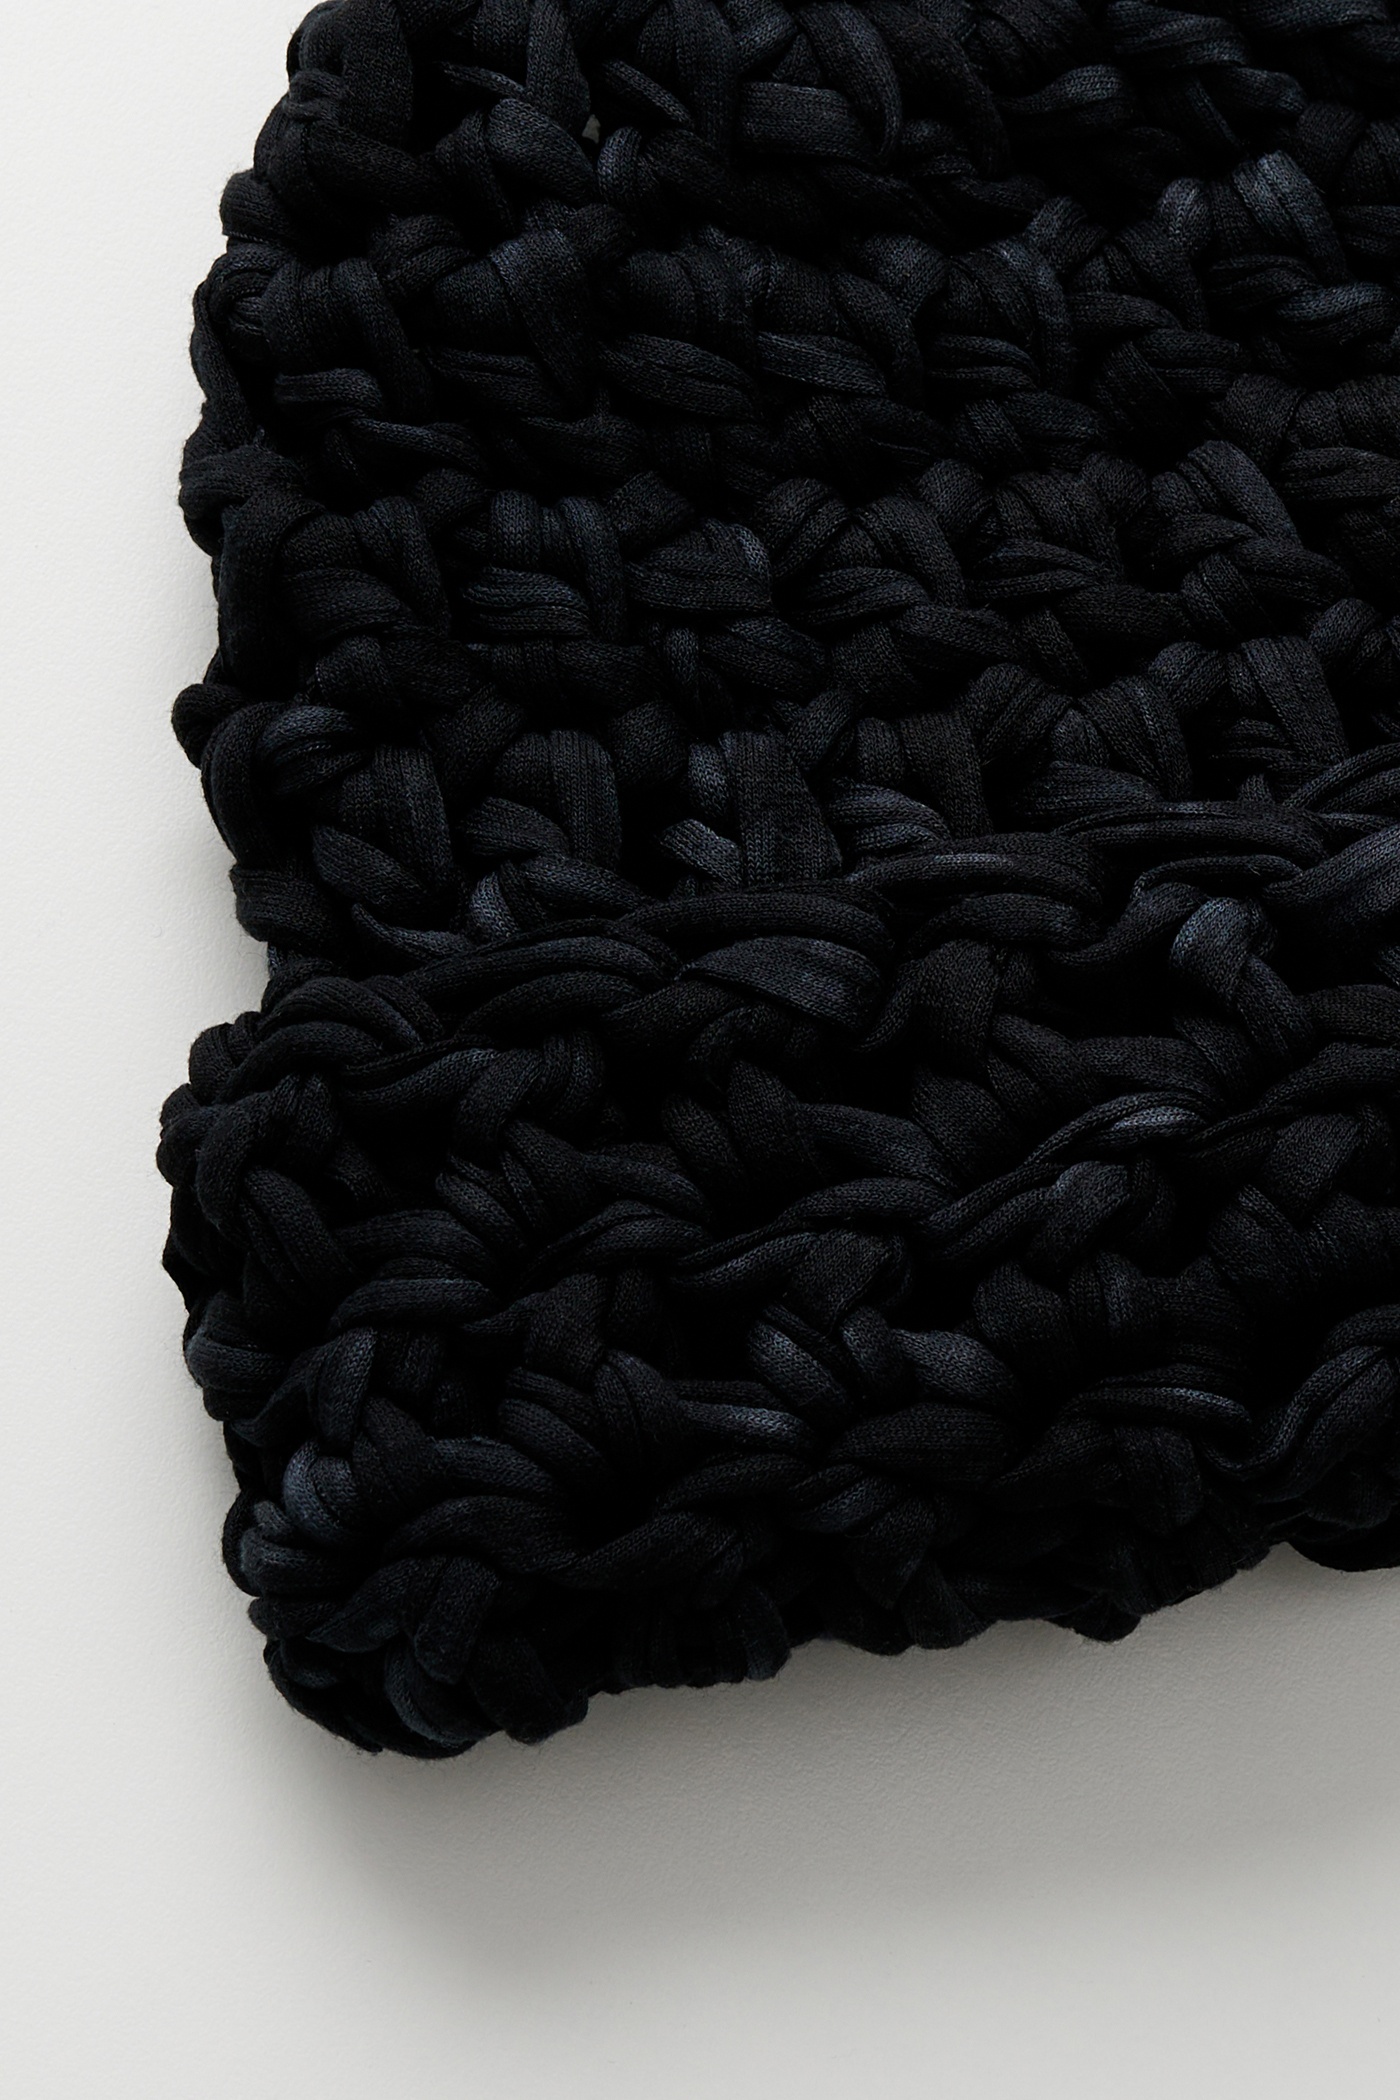 Crochet Beanie Overdyed Black Jersey - 3